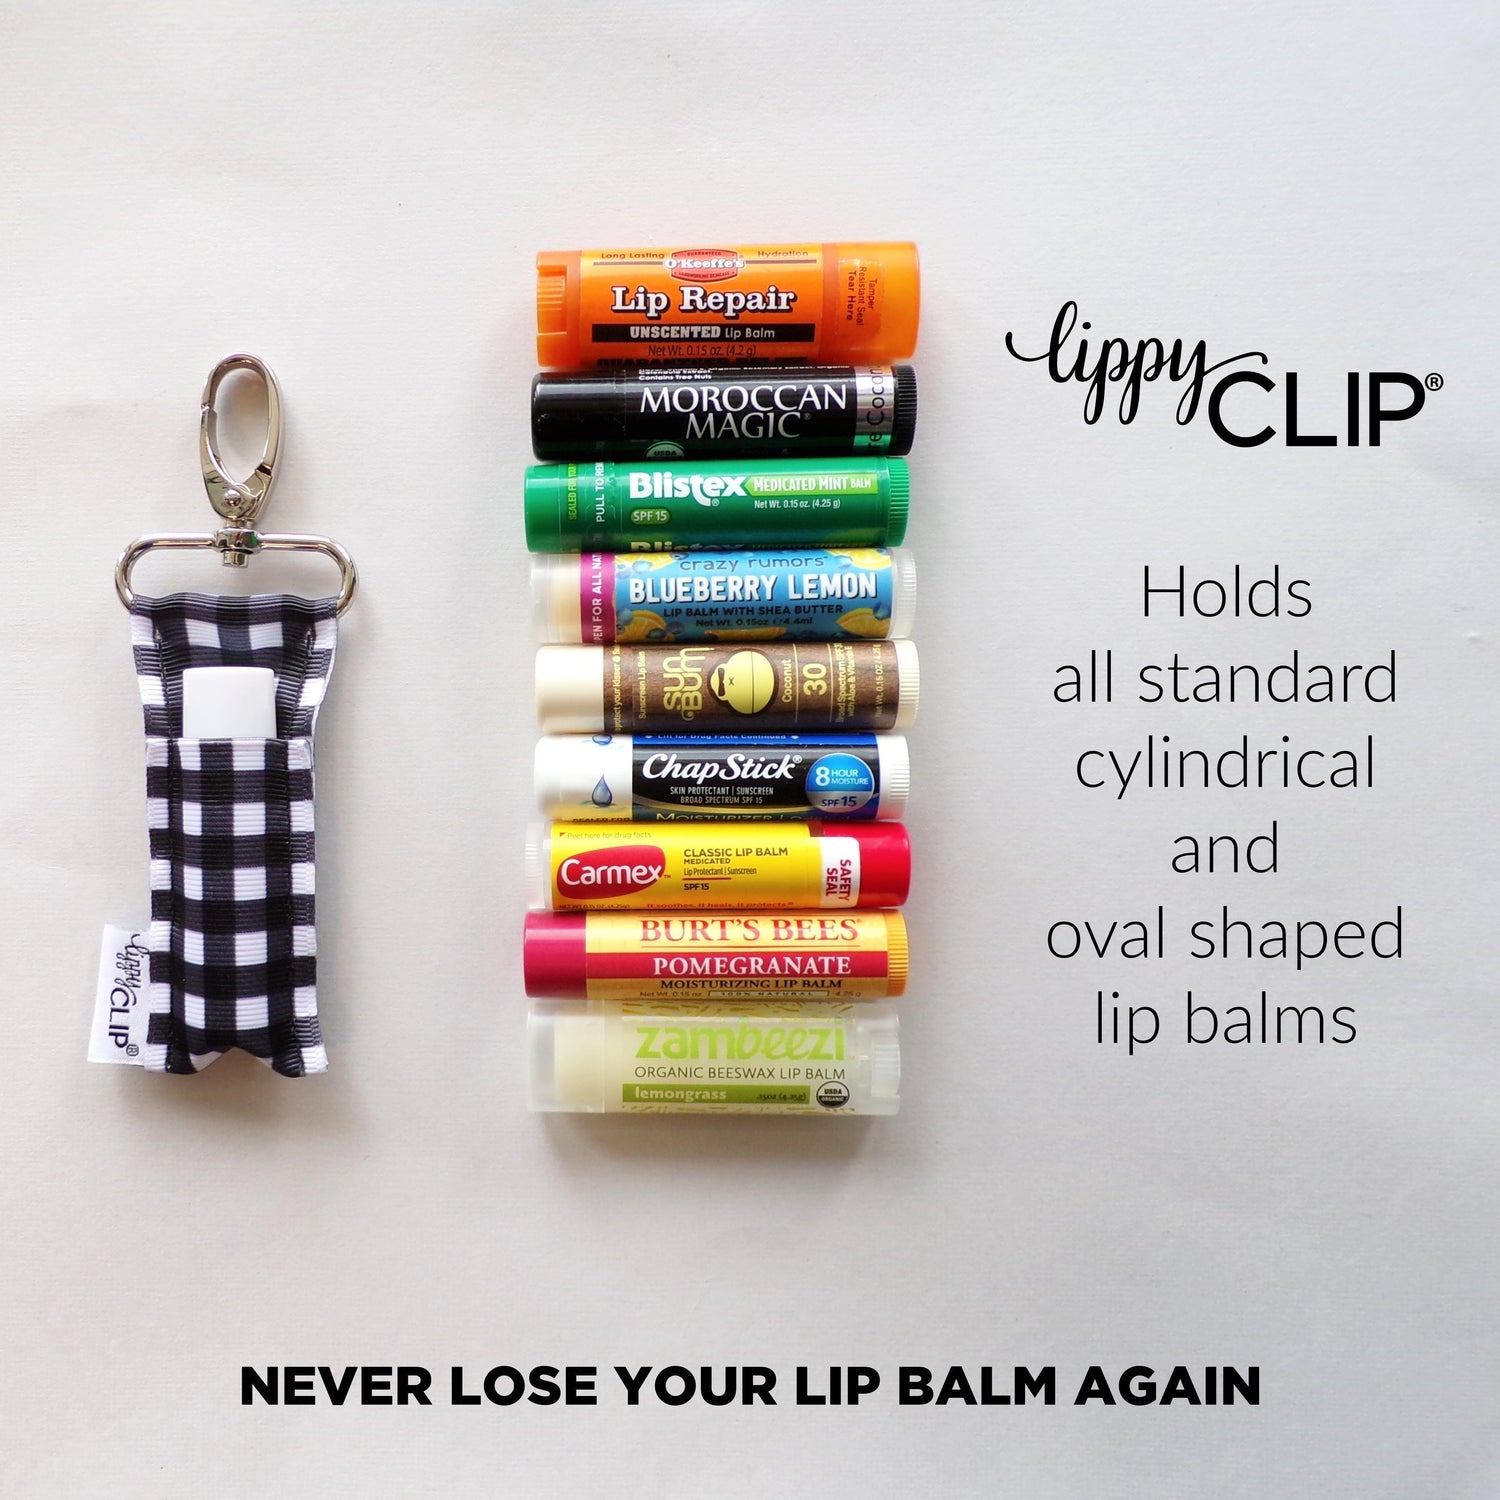 Soccer Ball LippyClip® - Discount Already Applied